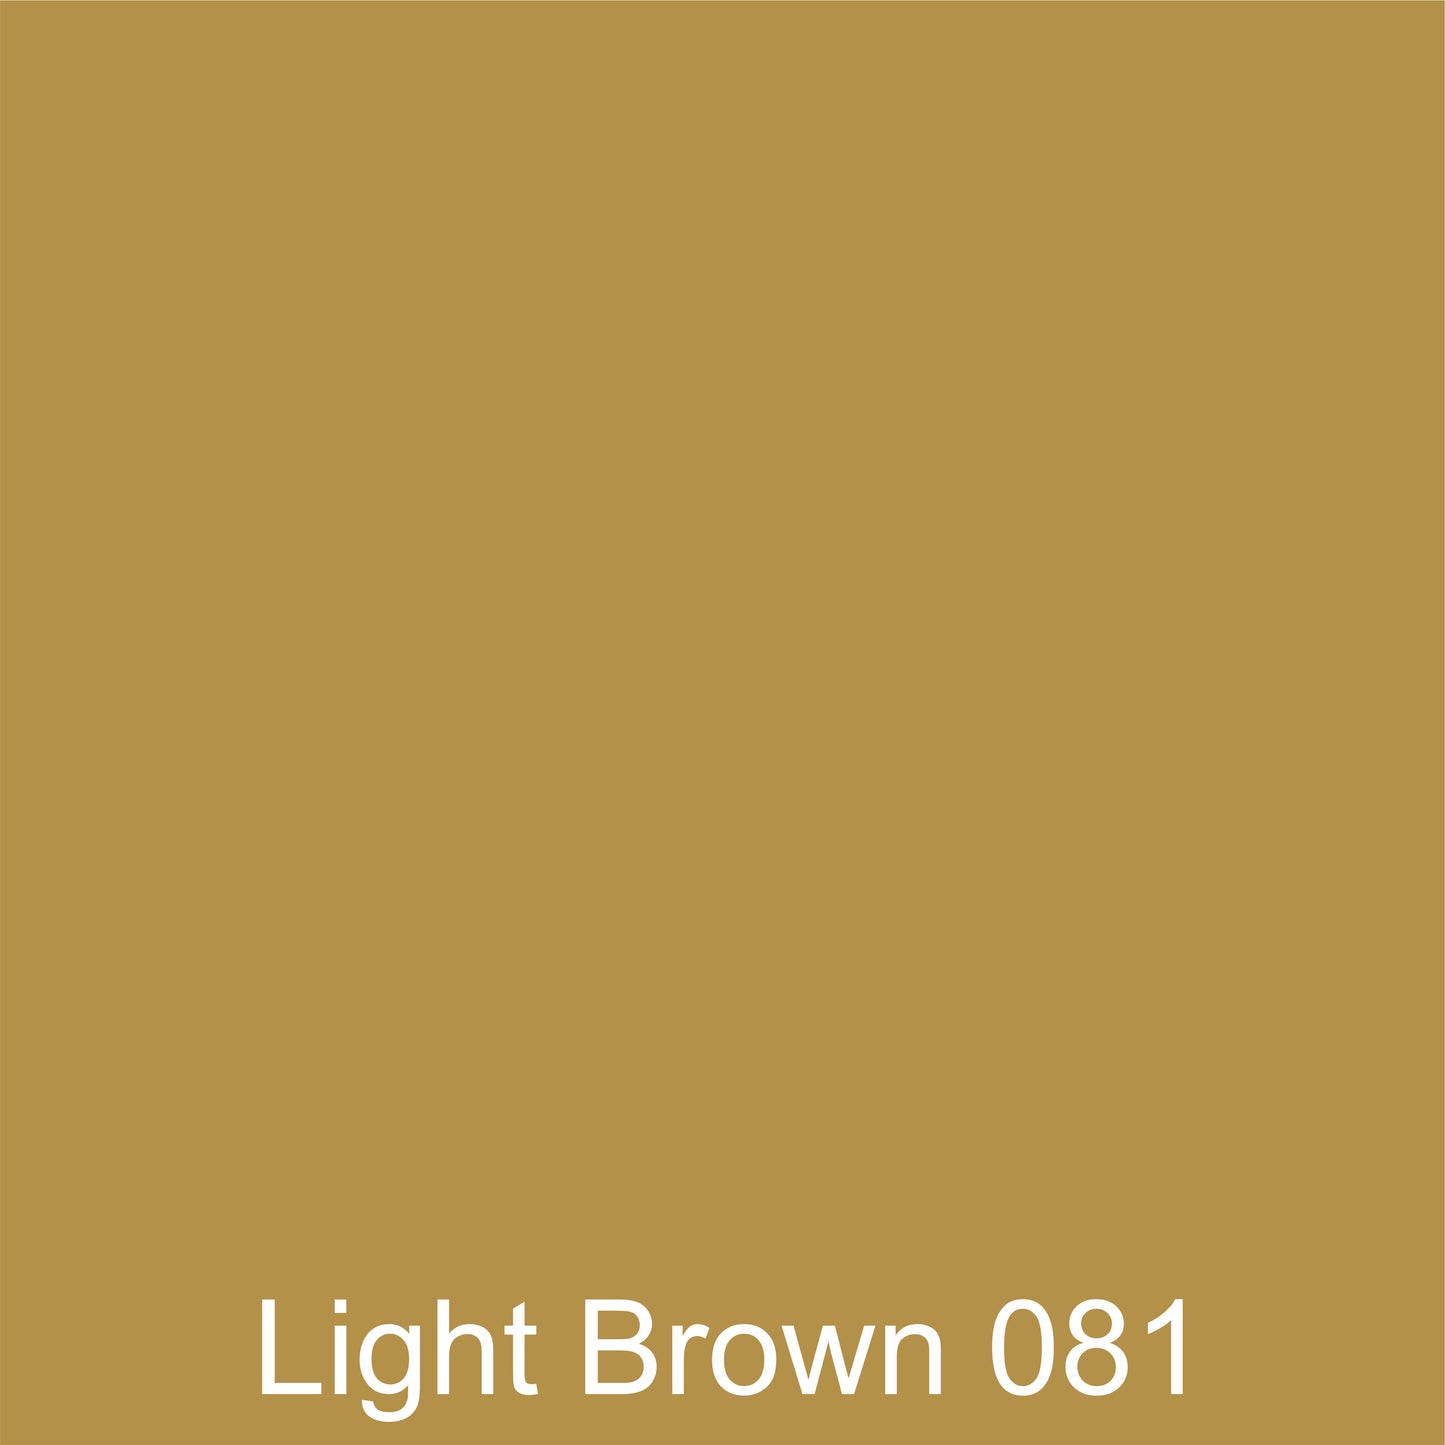 Oracal 651 Gloss :- Light Brown - 081